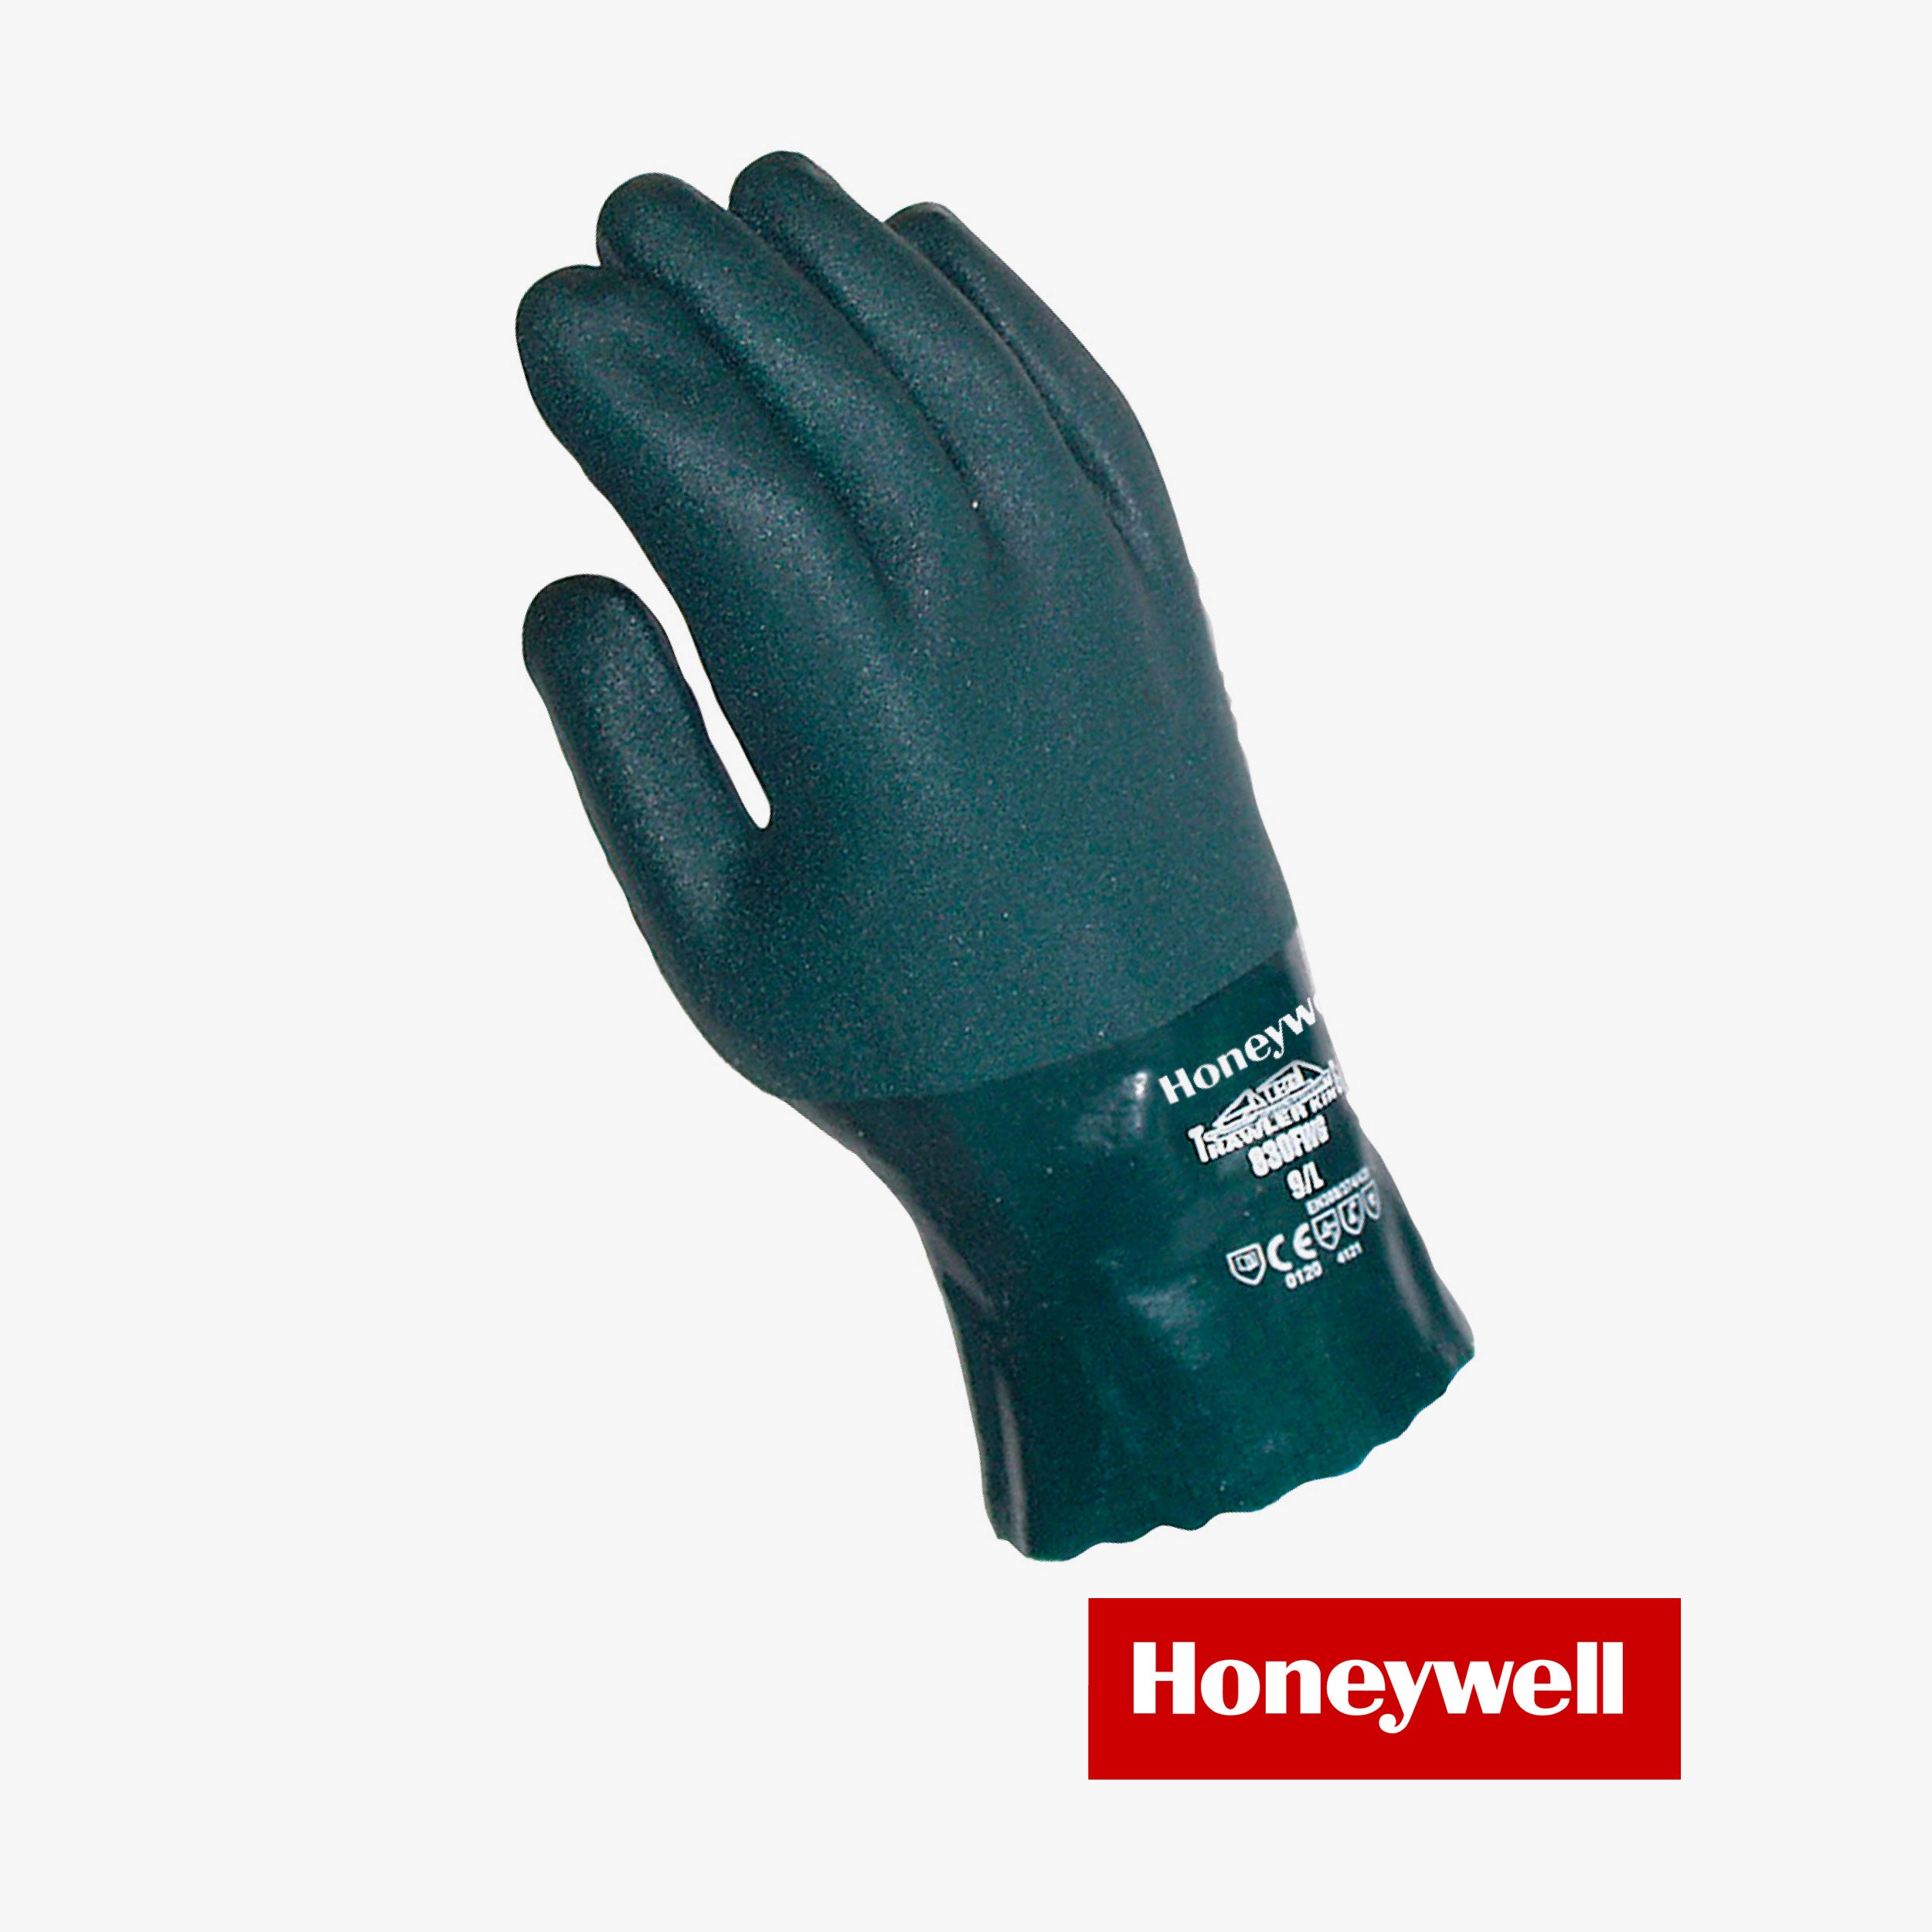 Trawler gloves king pvc green cm.27 size (10/9)